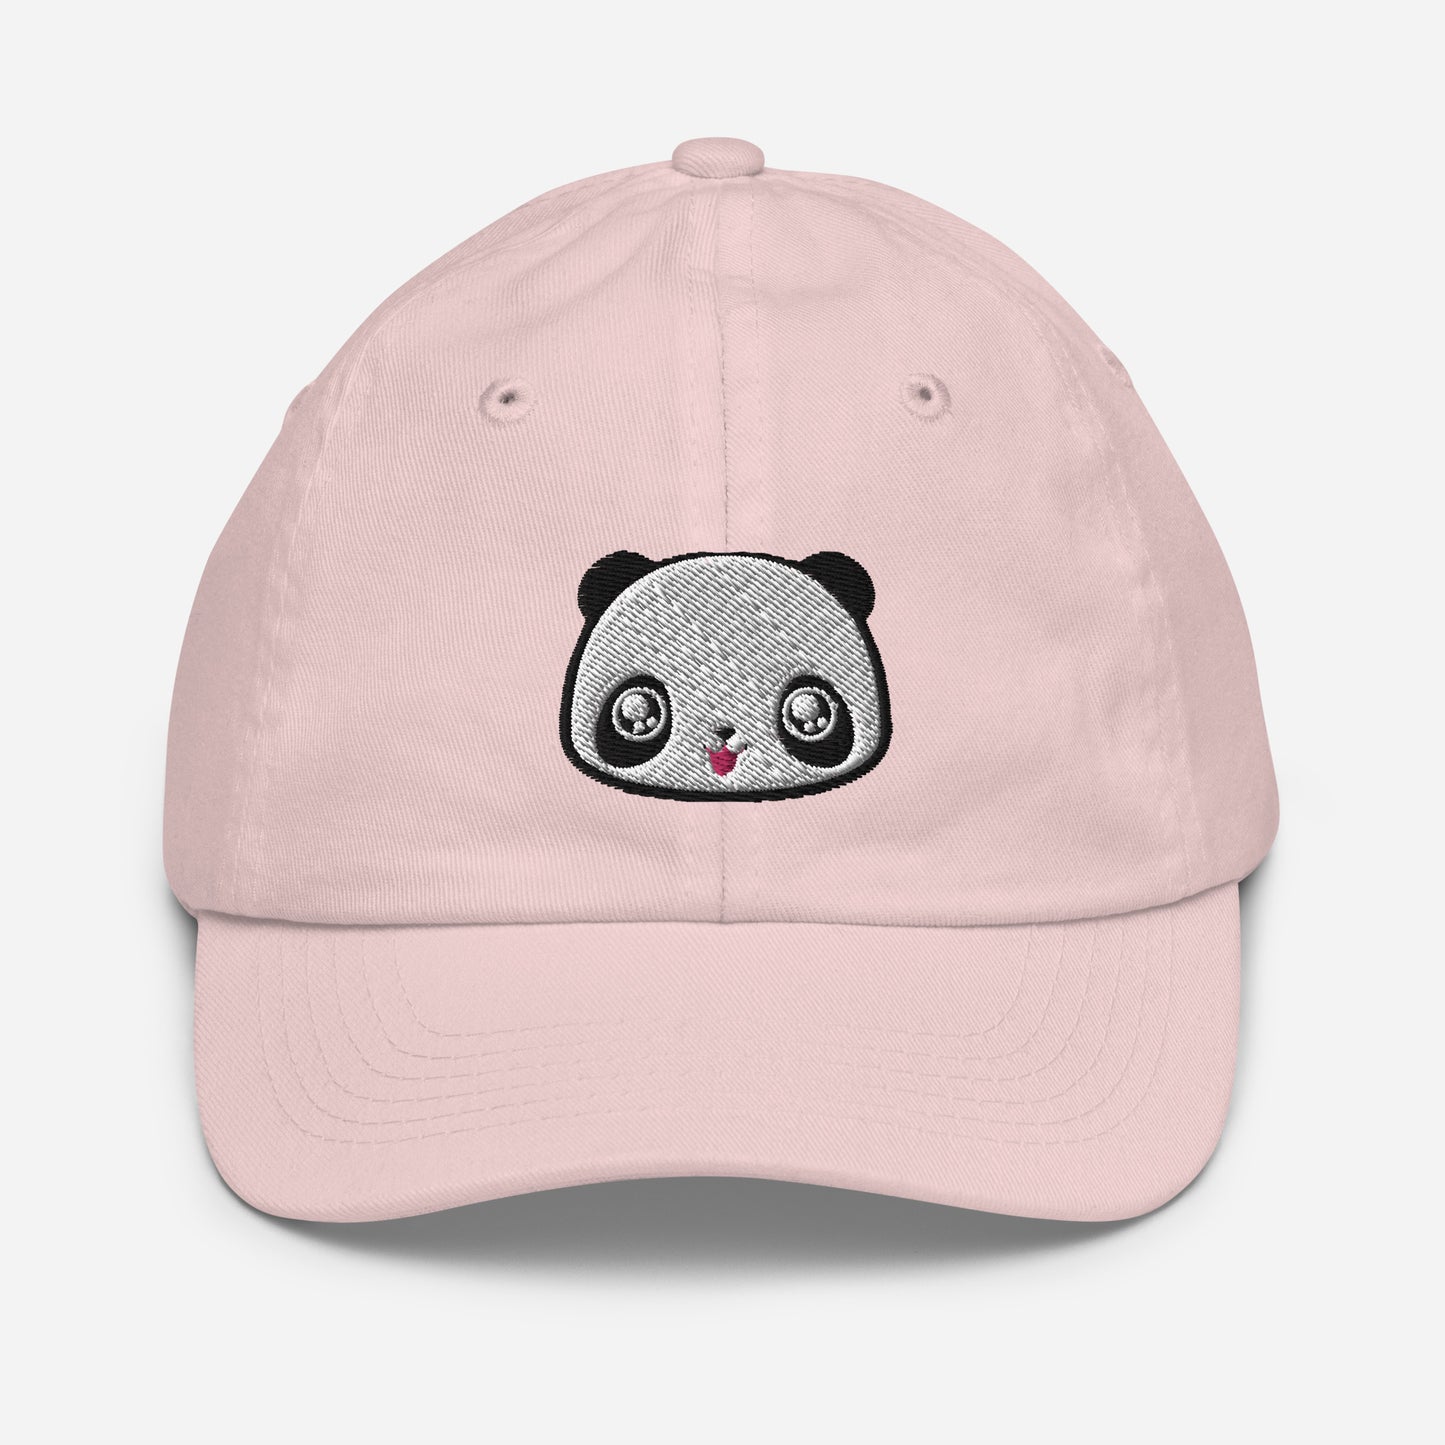 Light pink baseball cap with print of panda head